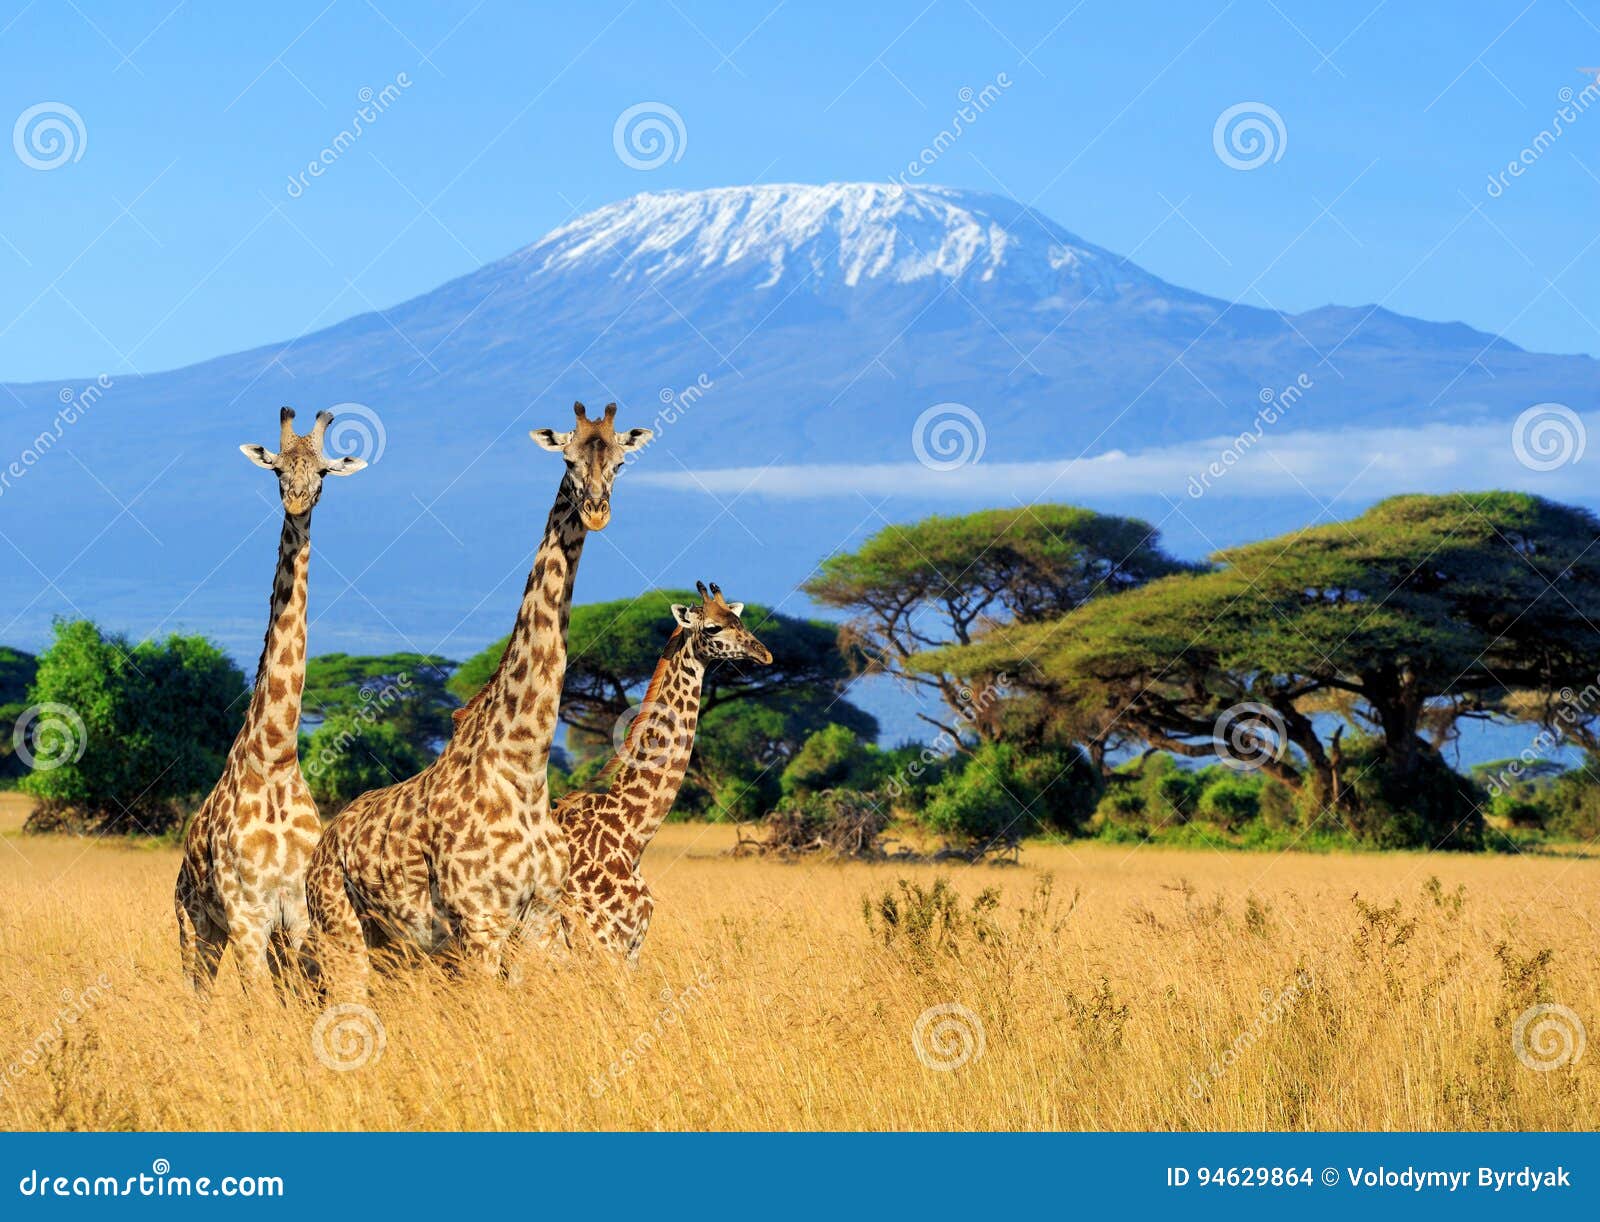 three giraffe in national park of kenya